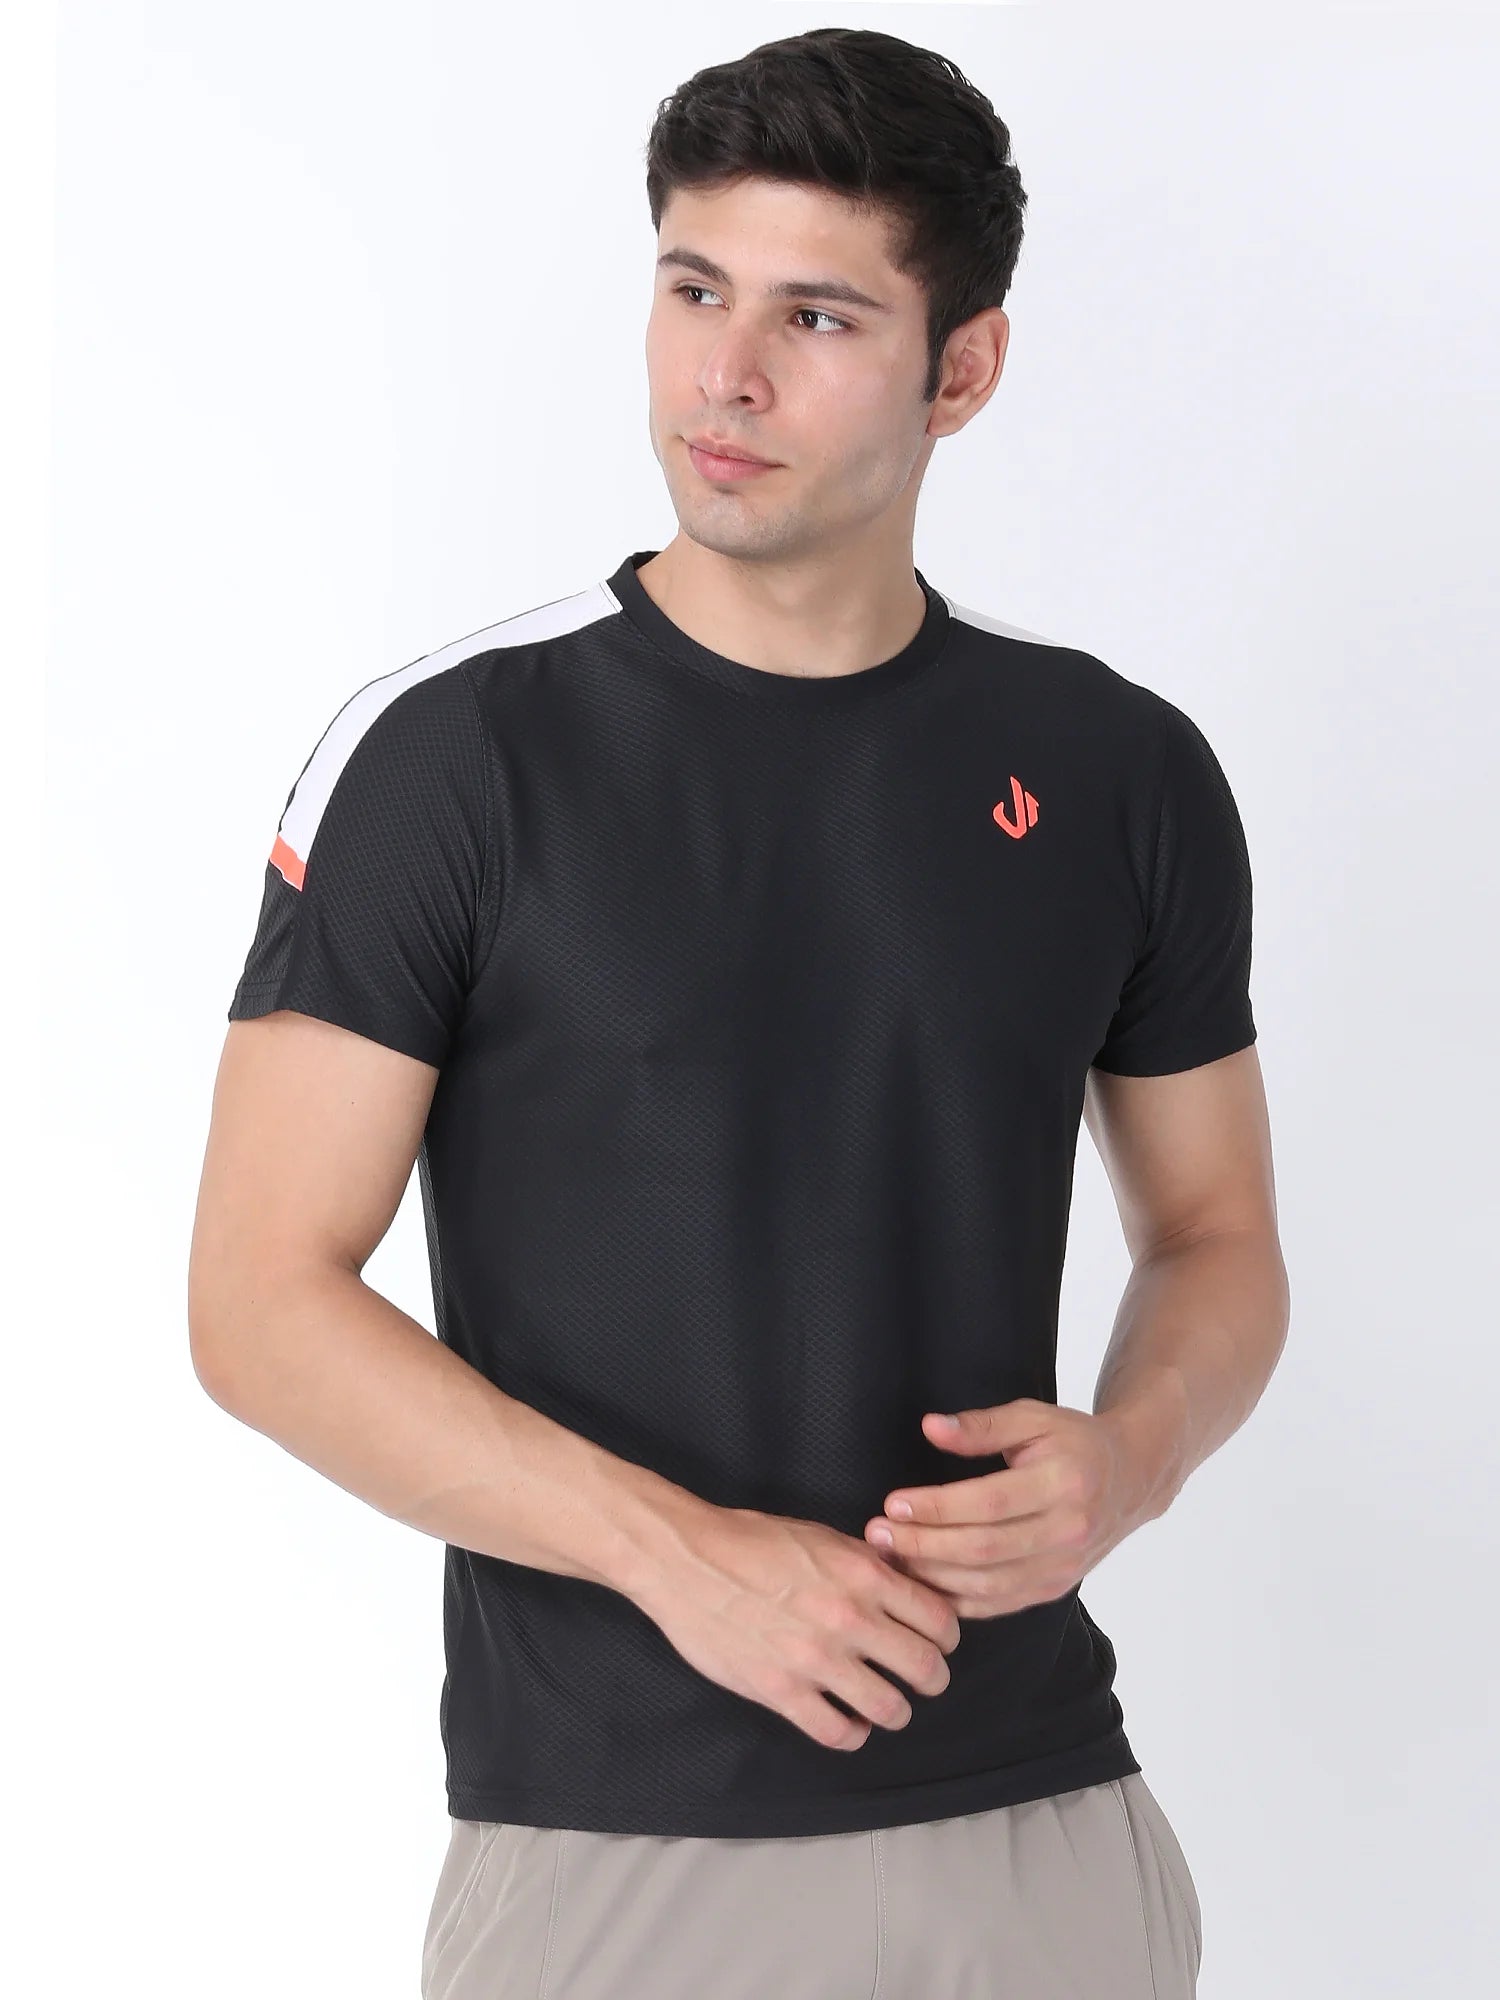 Jeffa Endurance T-shirt in Black